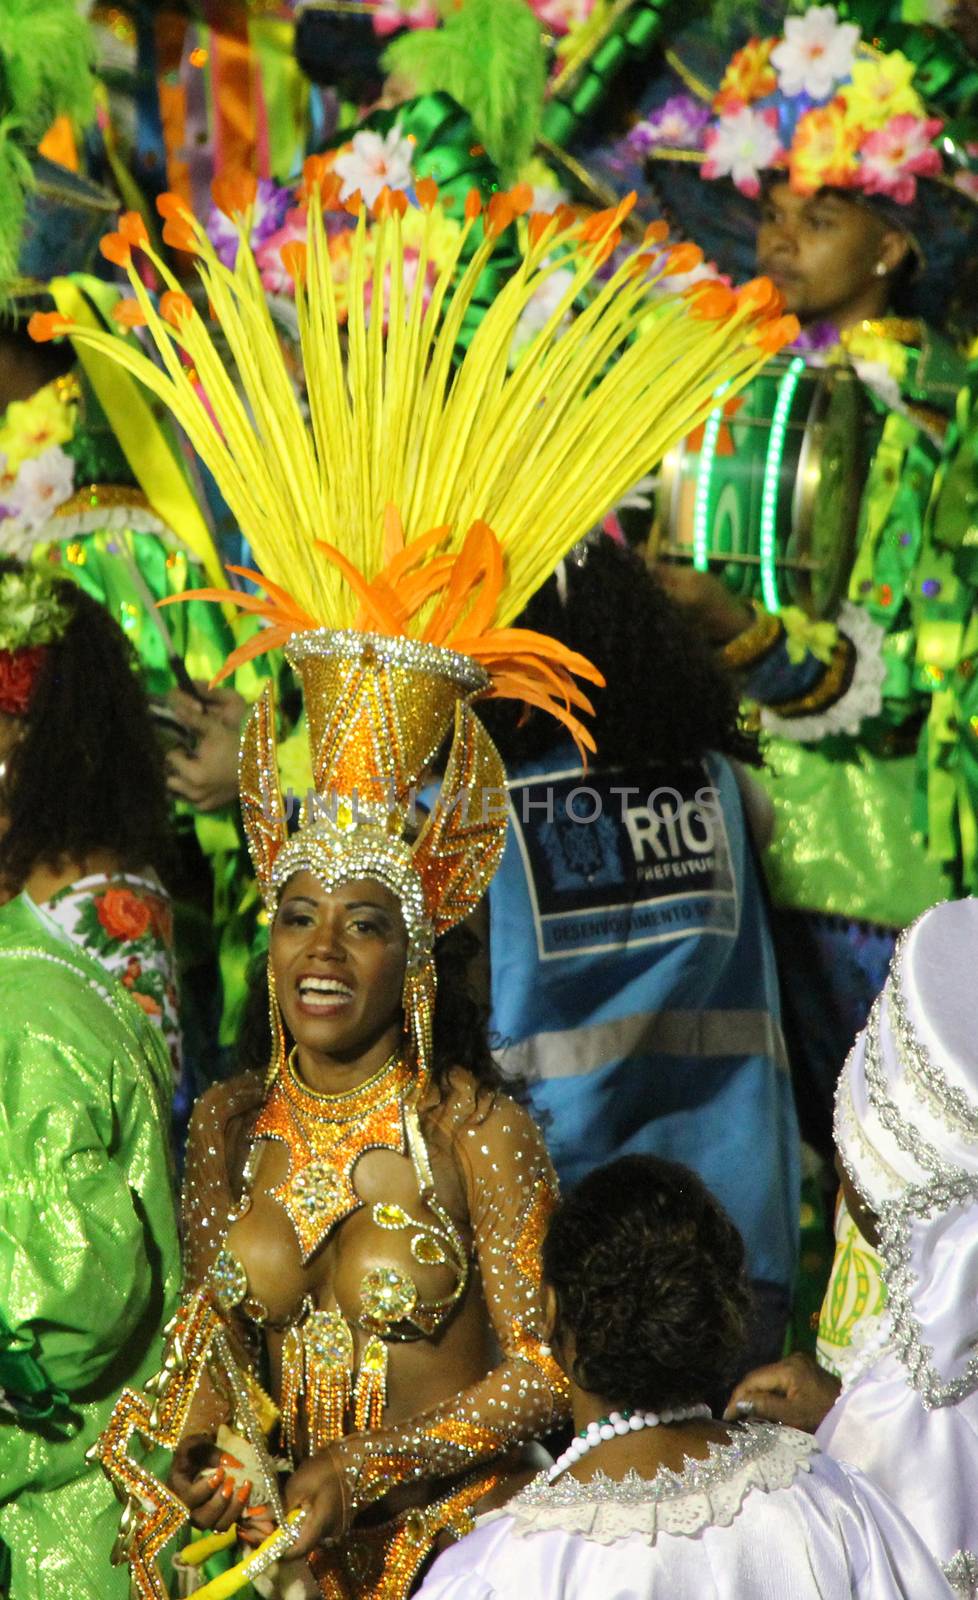 Rio Carnaval by photocdn39